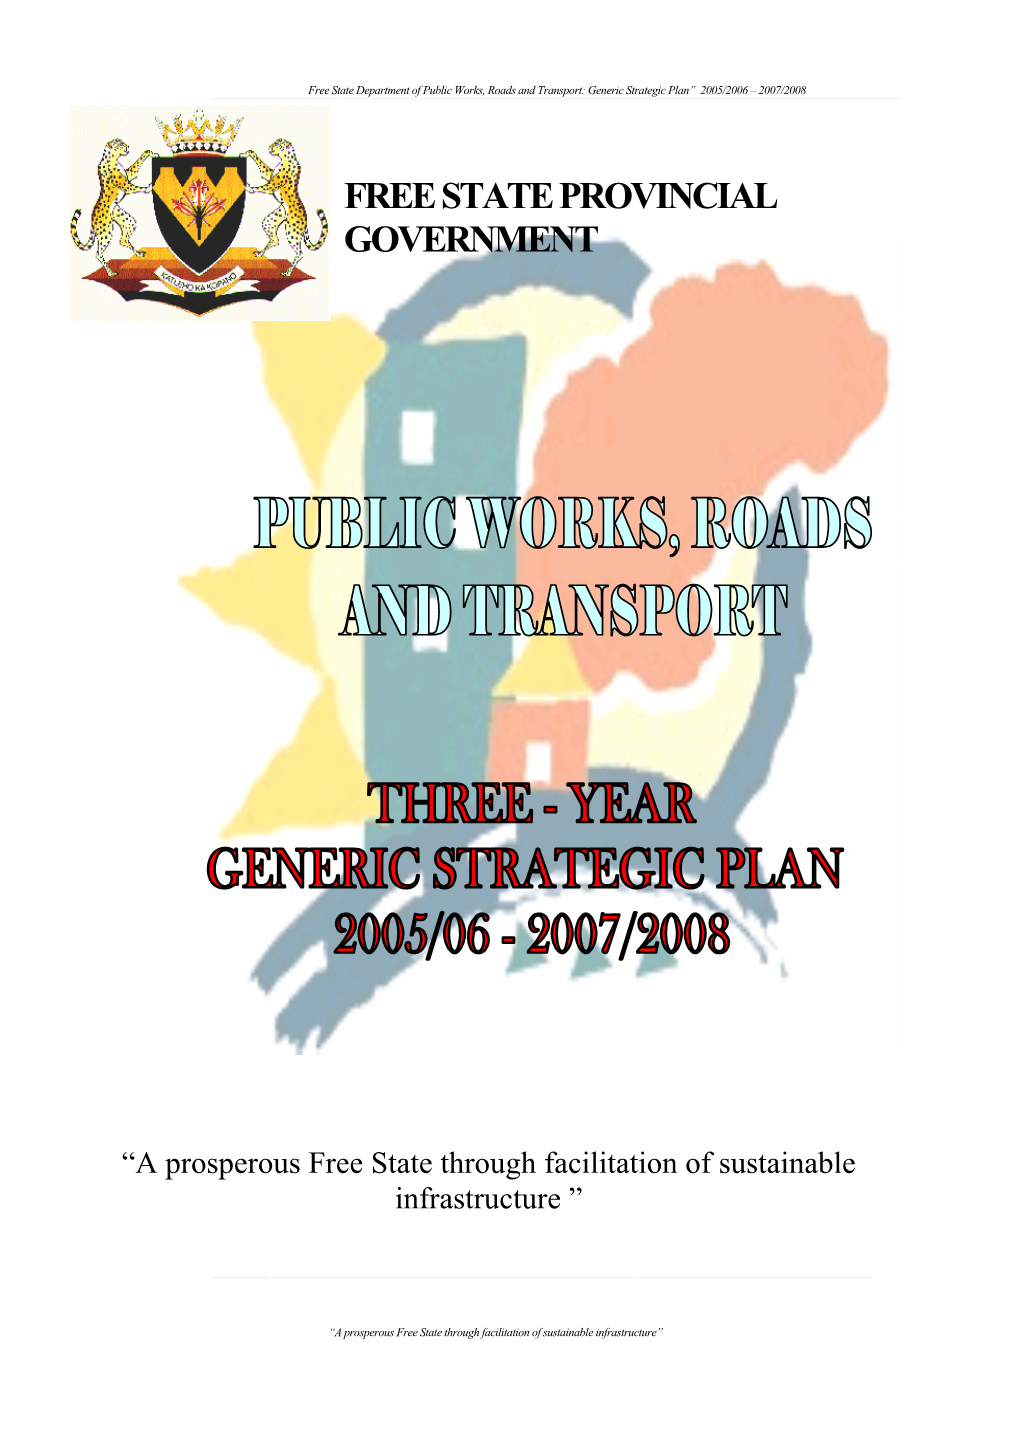 2005 / 2006 to 2007 / 2008 Generic Strategic Plan